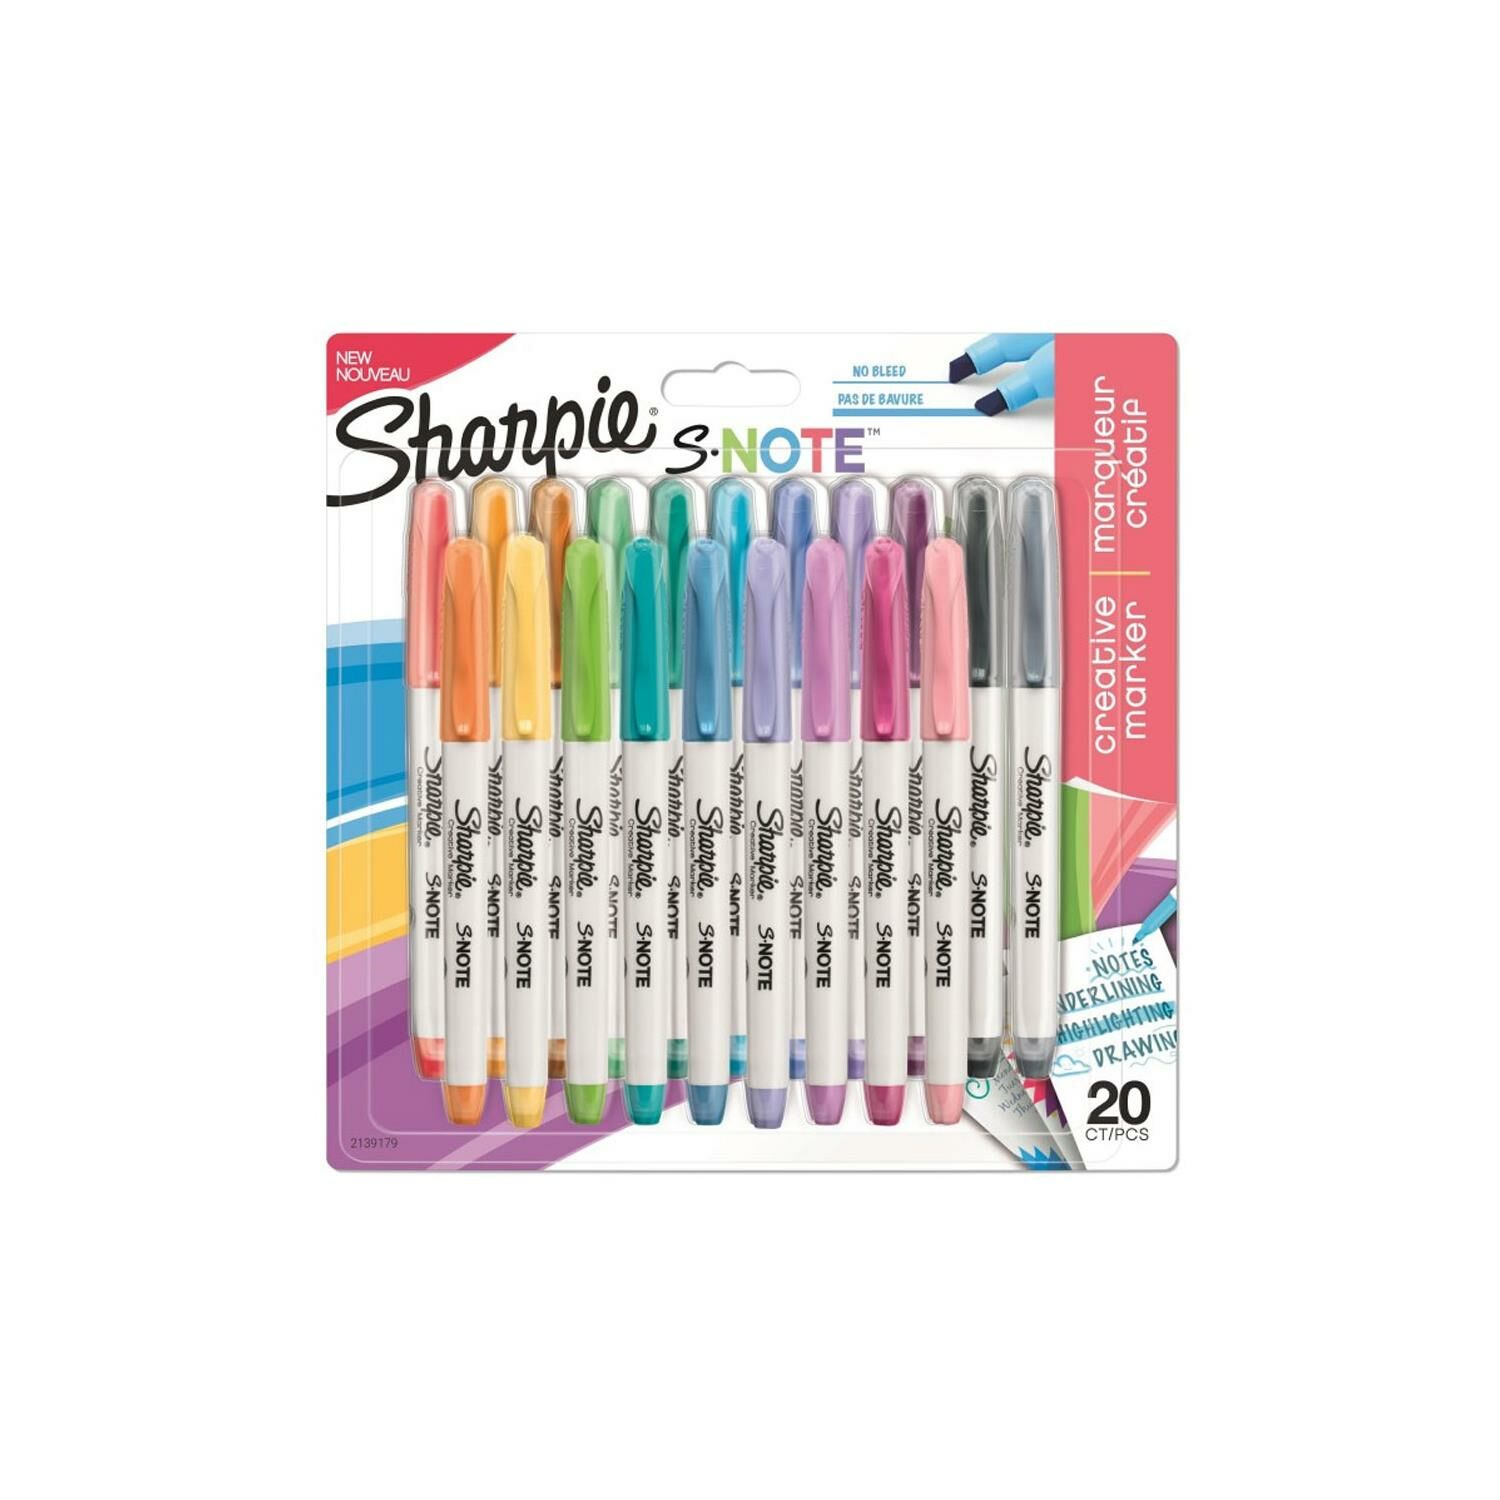 Sharpie S-Note 20 Renk Creative Markör İşaretleme Kalemi Seti 2139179